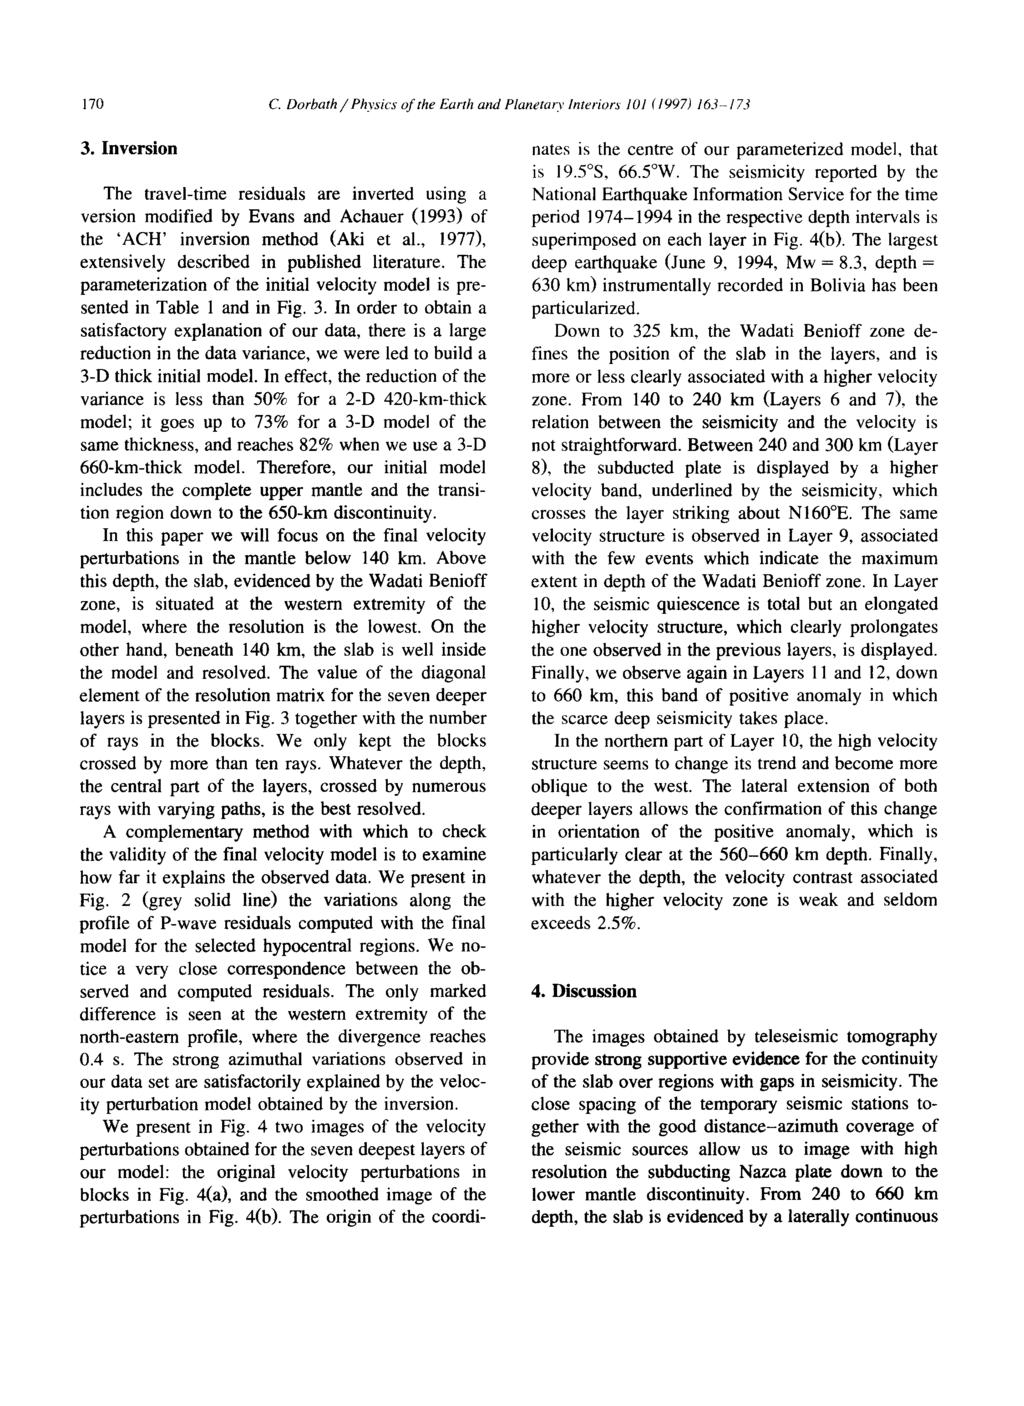 170 C. Dorbath / Physics of the Earth and Planeta O' Interiors 101 (1997) 163-173 3.